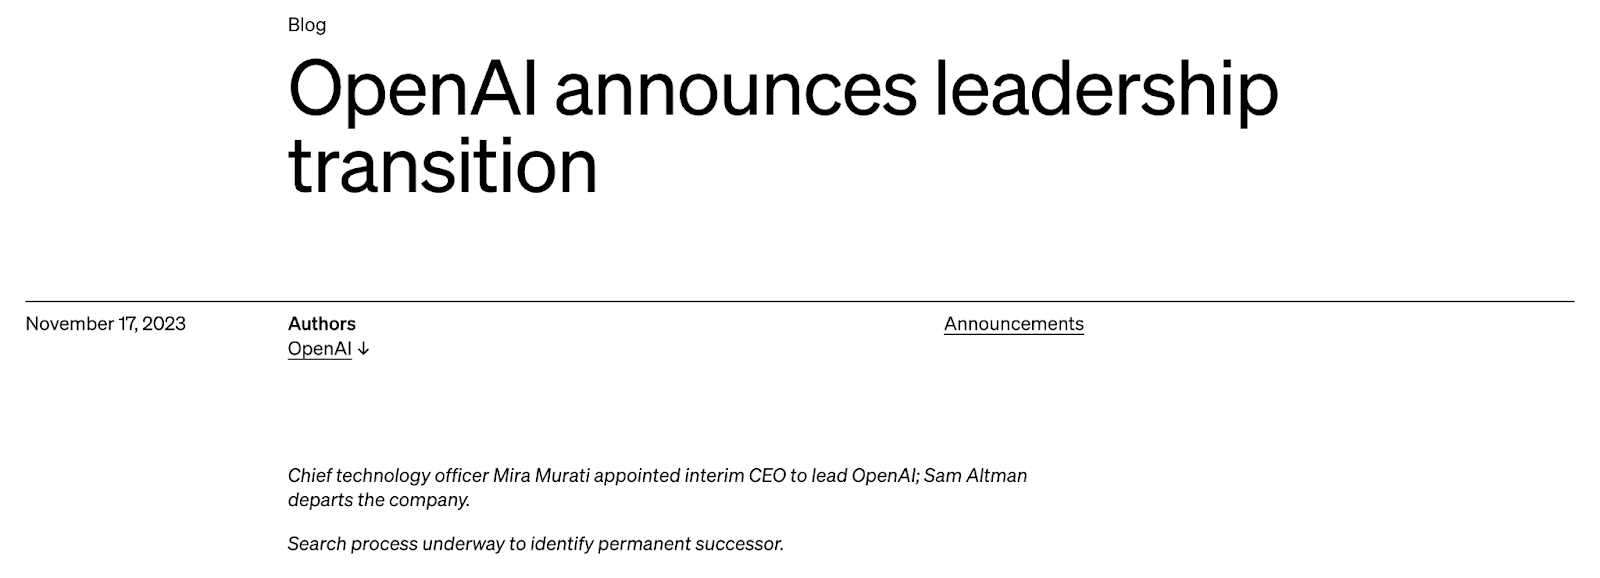 <a href="https://openai.com/blog/openai-announces-leadership-transition">OpenAI announces leadership transition</a>